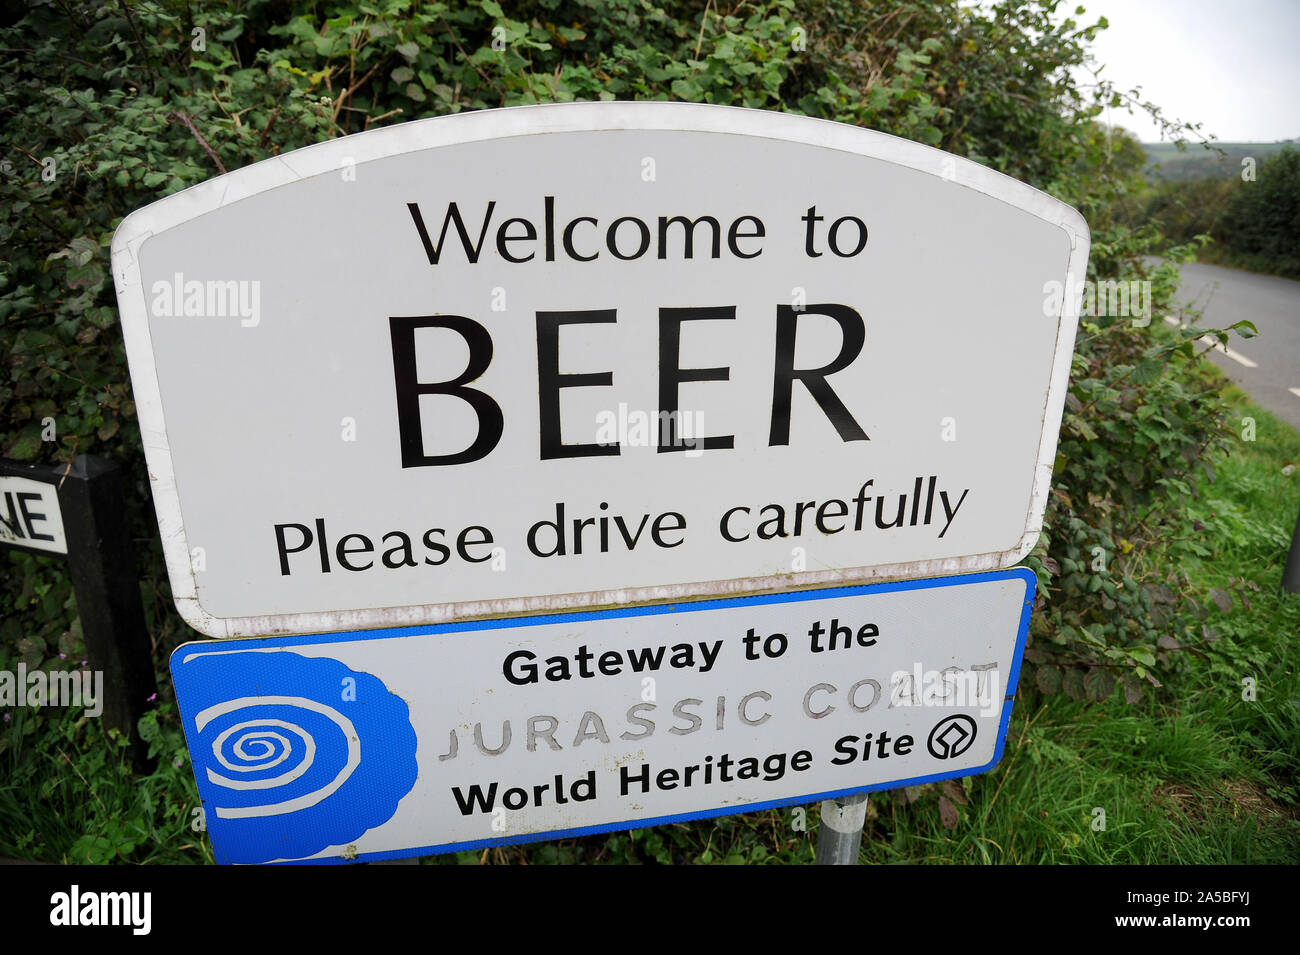 Aldea de cerveza signo, Devon, Inglaterra. Foto de stock